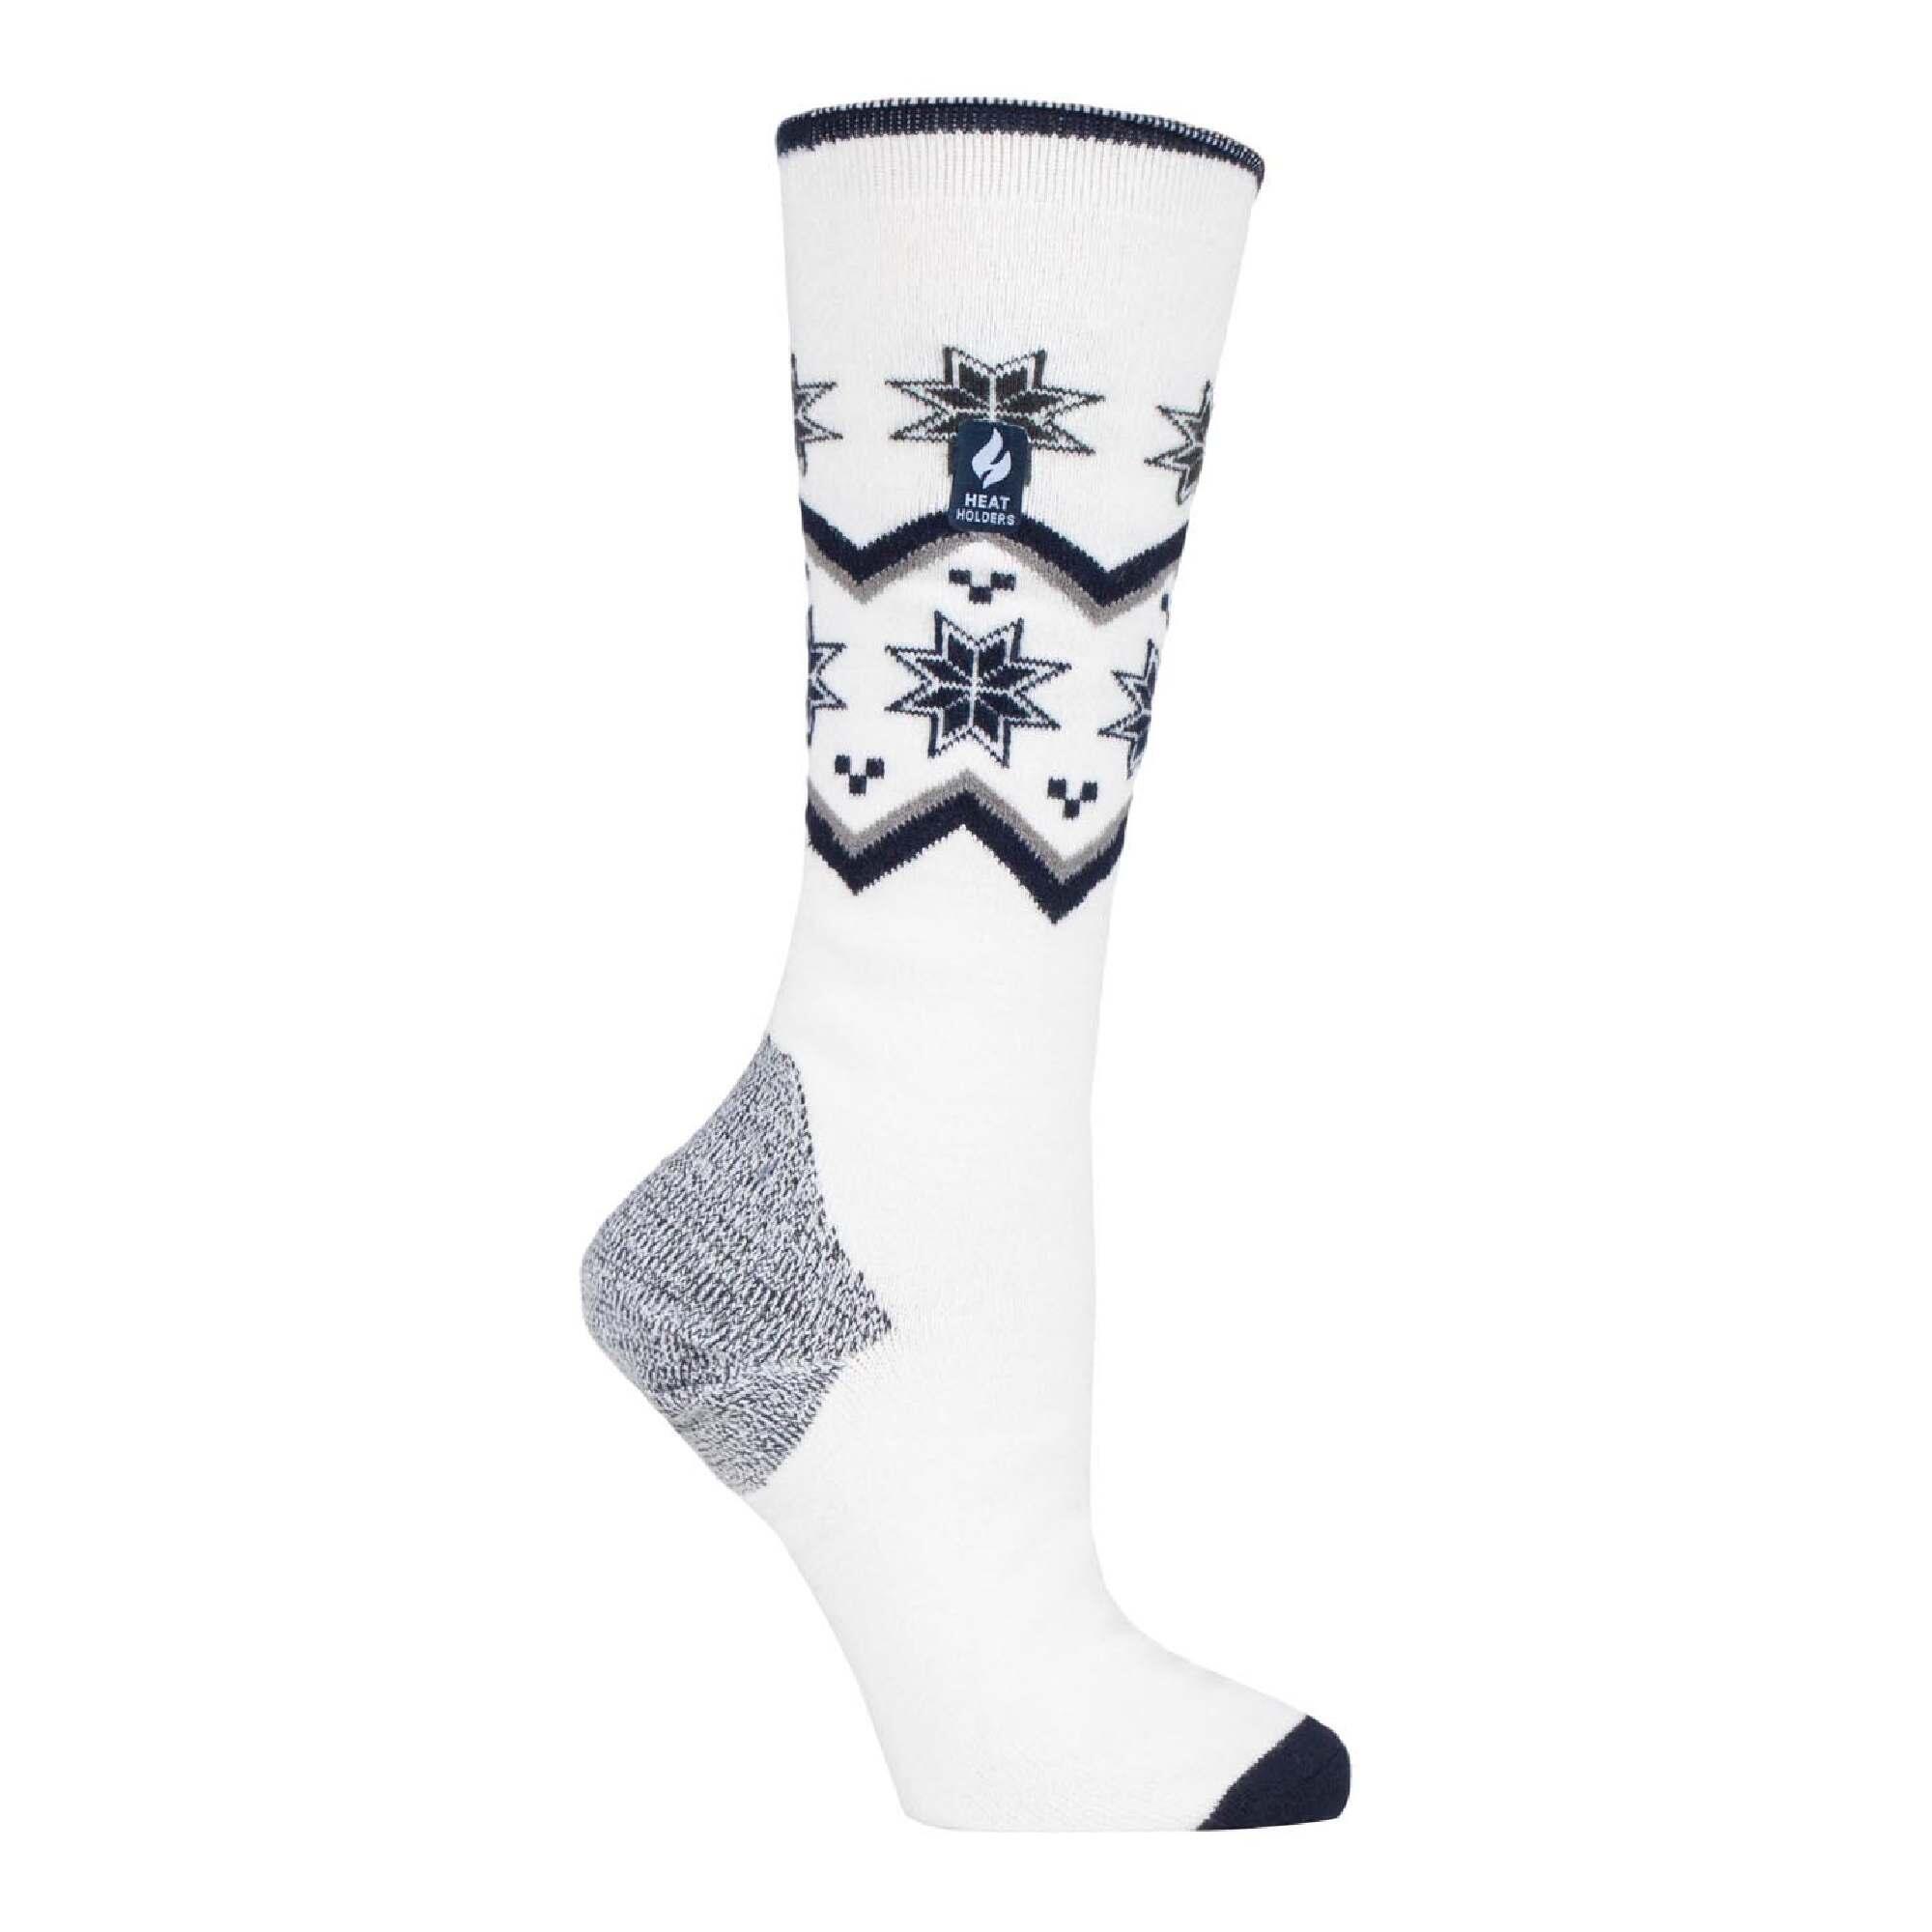 Ladies Thin Lightweight Warm Thermal Winter Long Knee High Ski Socks 1/4